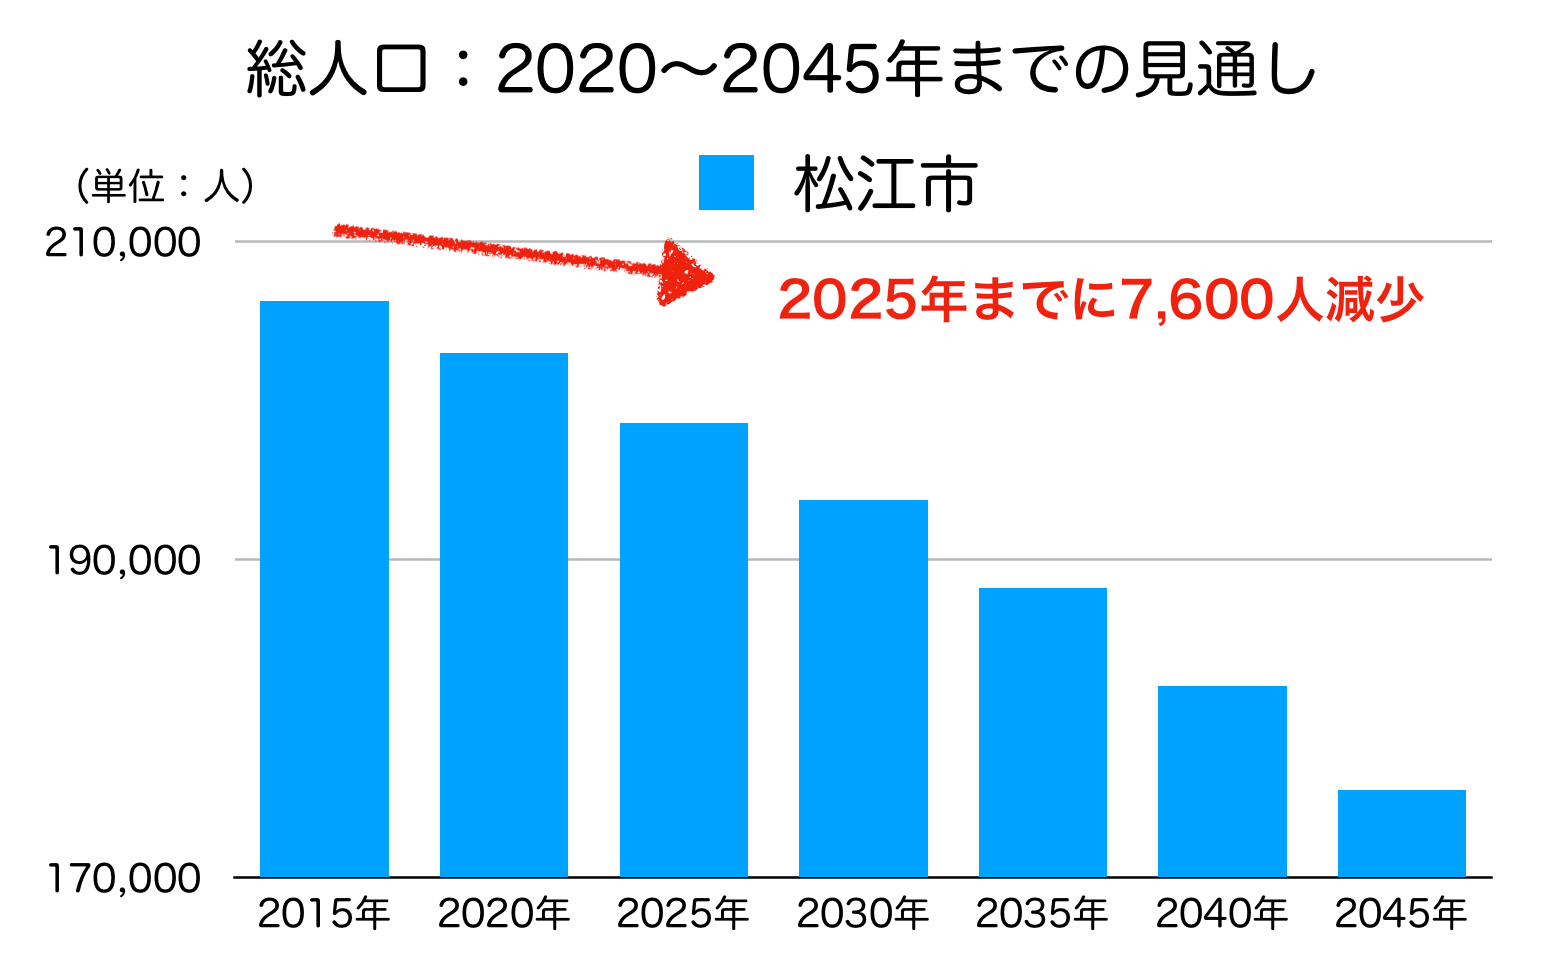 松江市の人口予測